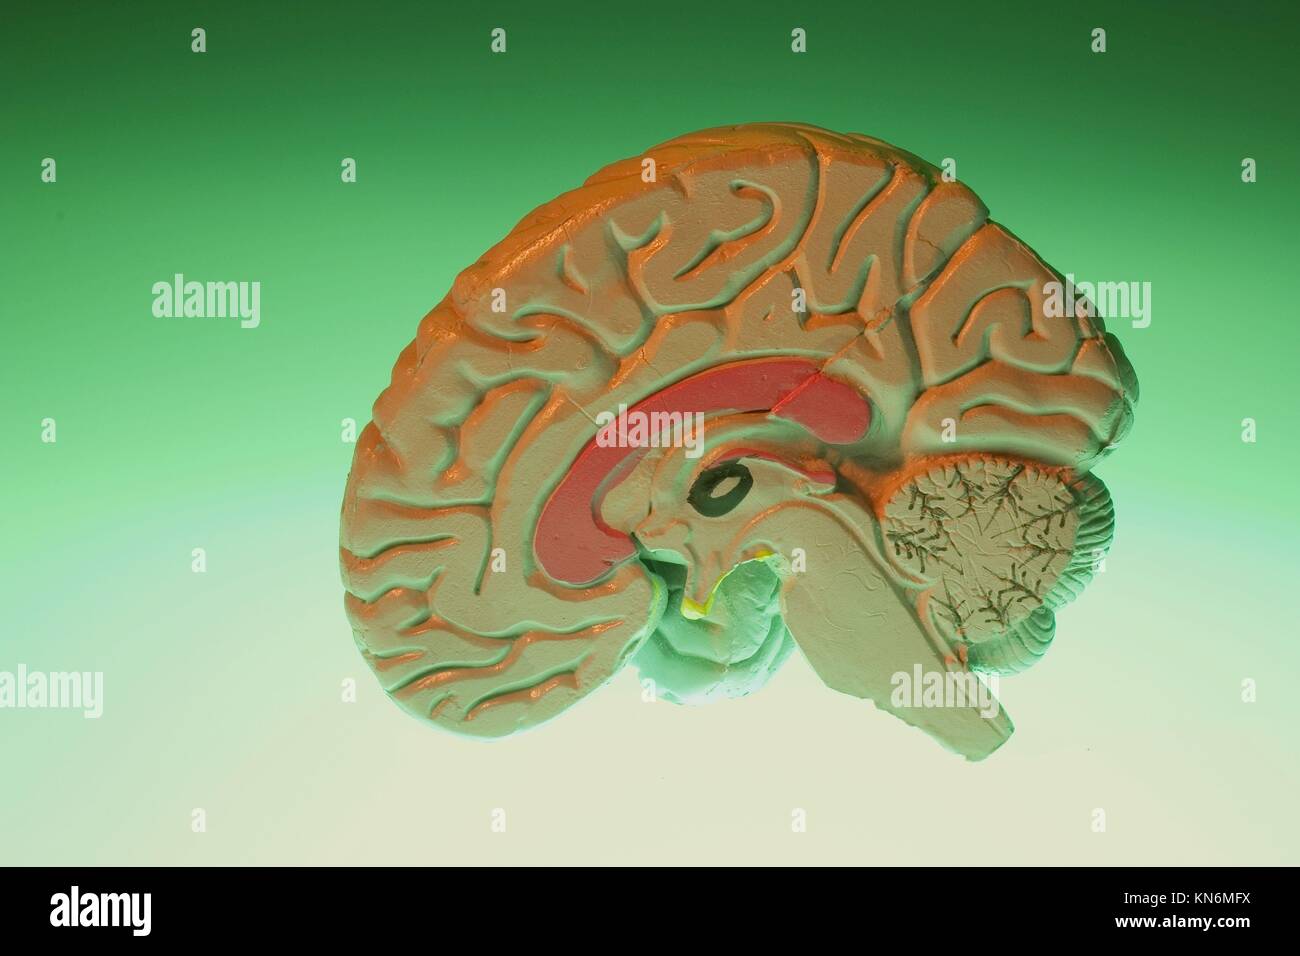 Fake brain 3 Diagram